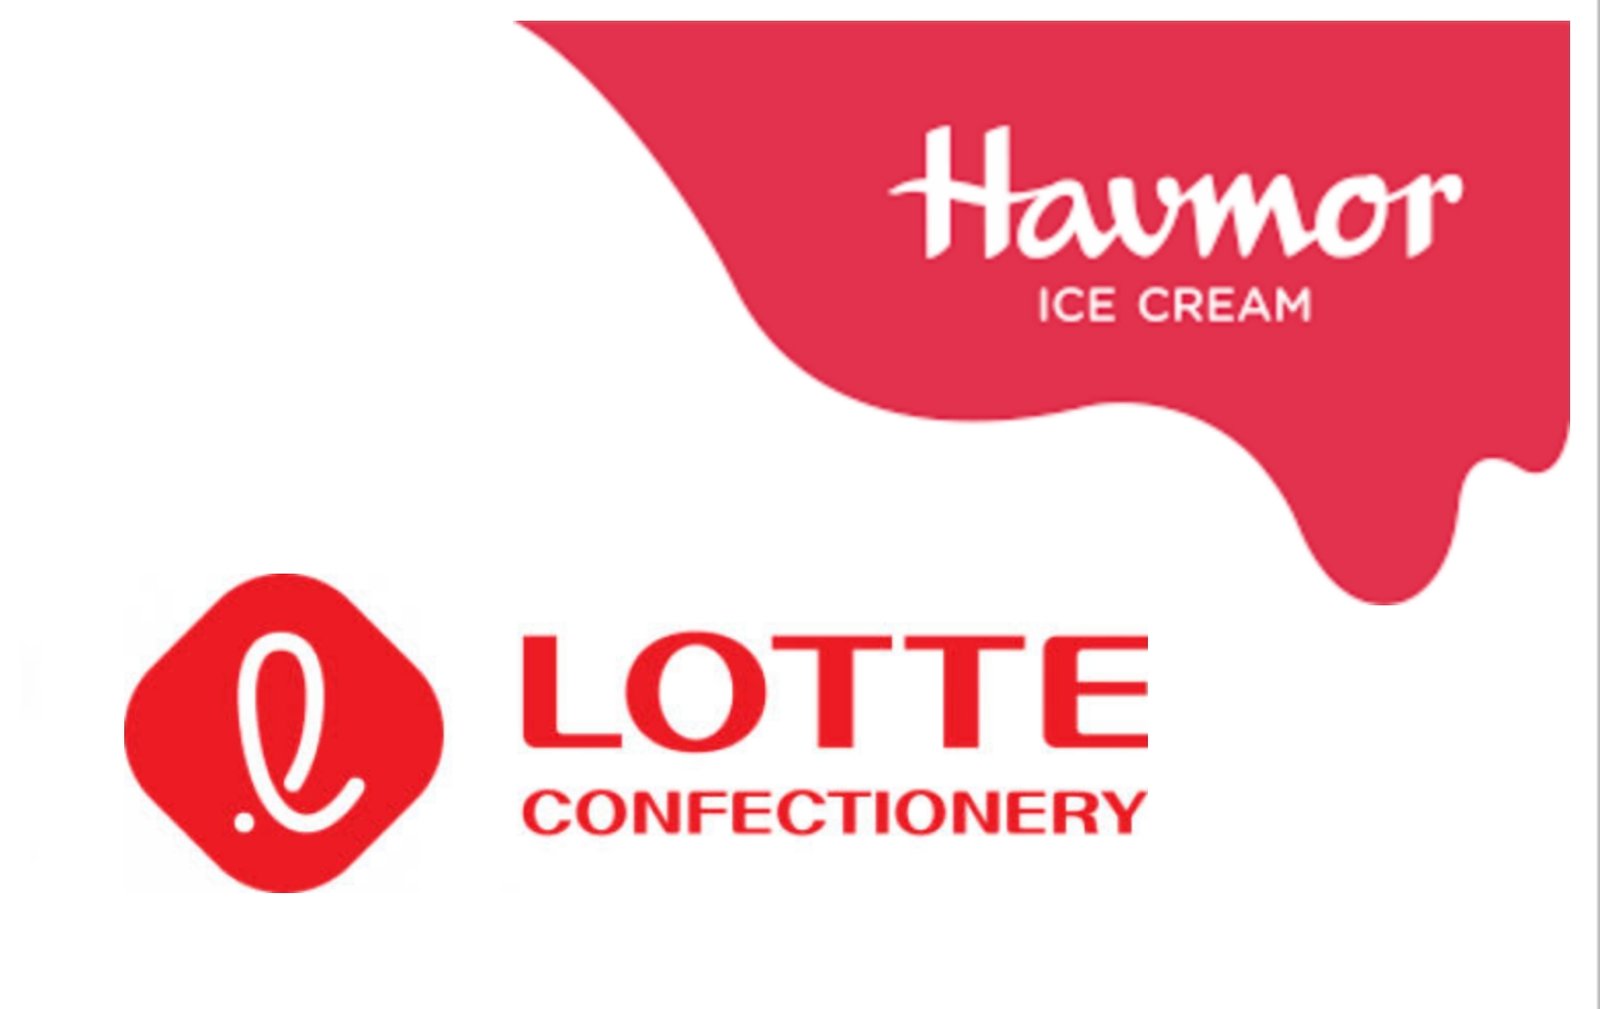 Buy Havmor Sandwich Ice Cream Online at Best Price of Rs 70 - bigbasket